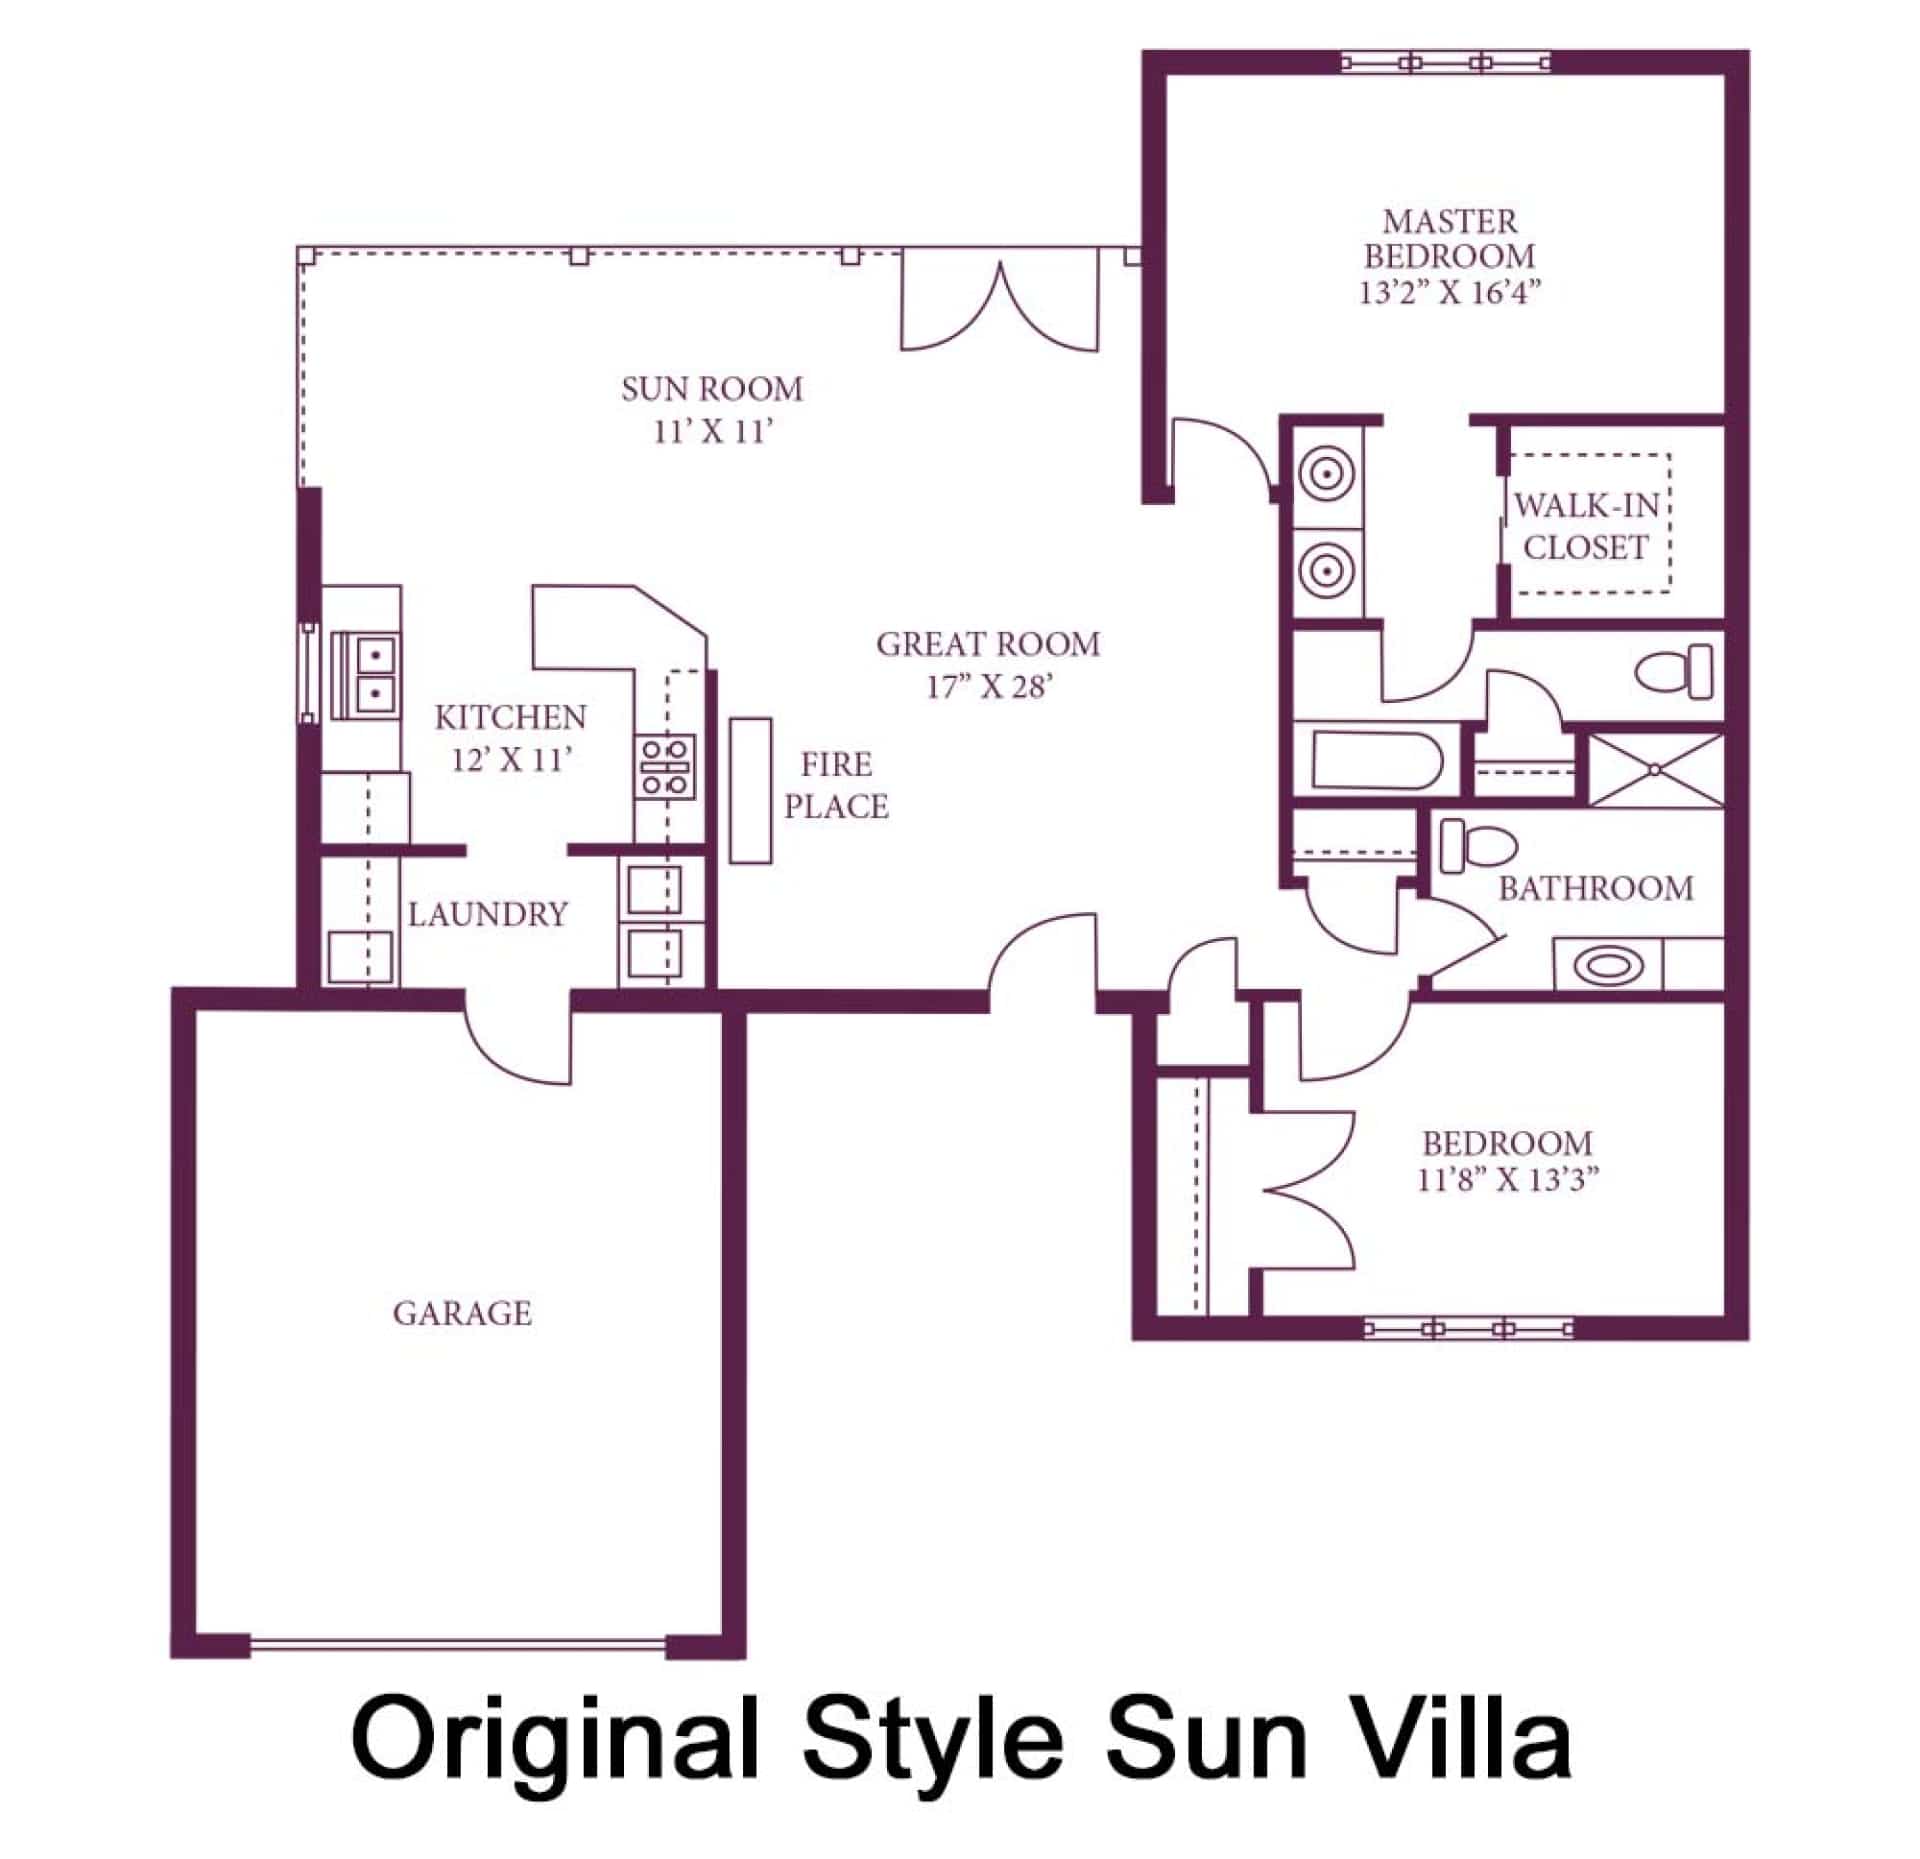 Floorplan for the Original Sun Villa